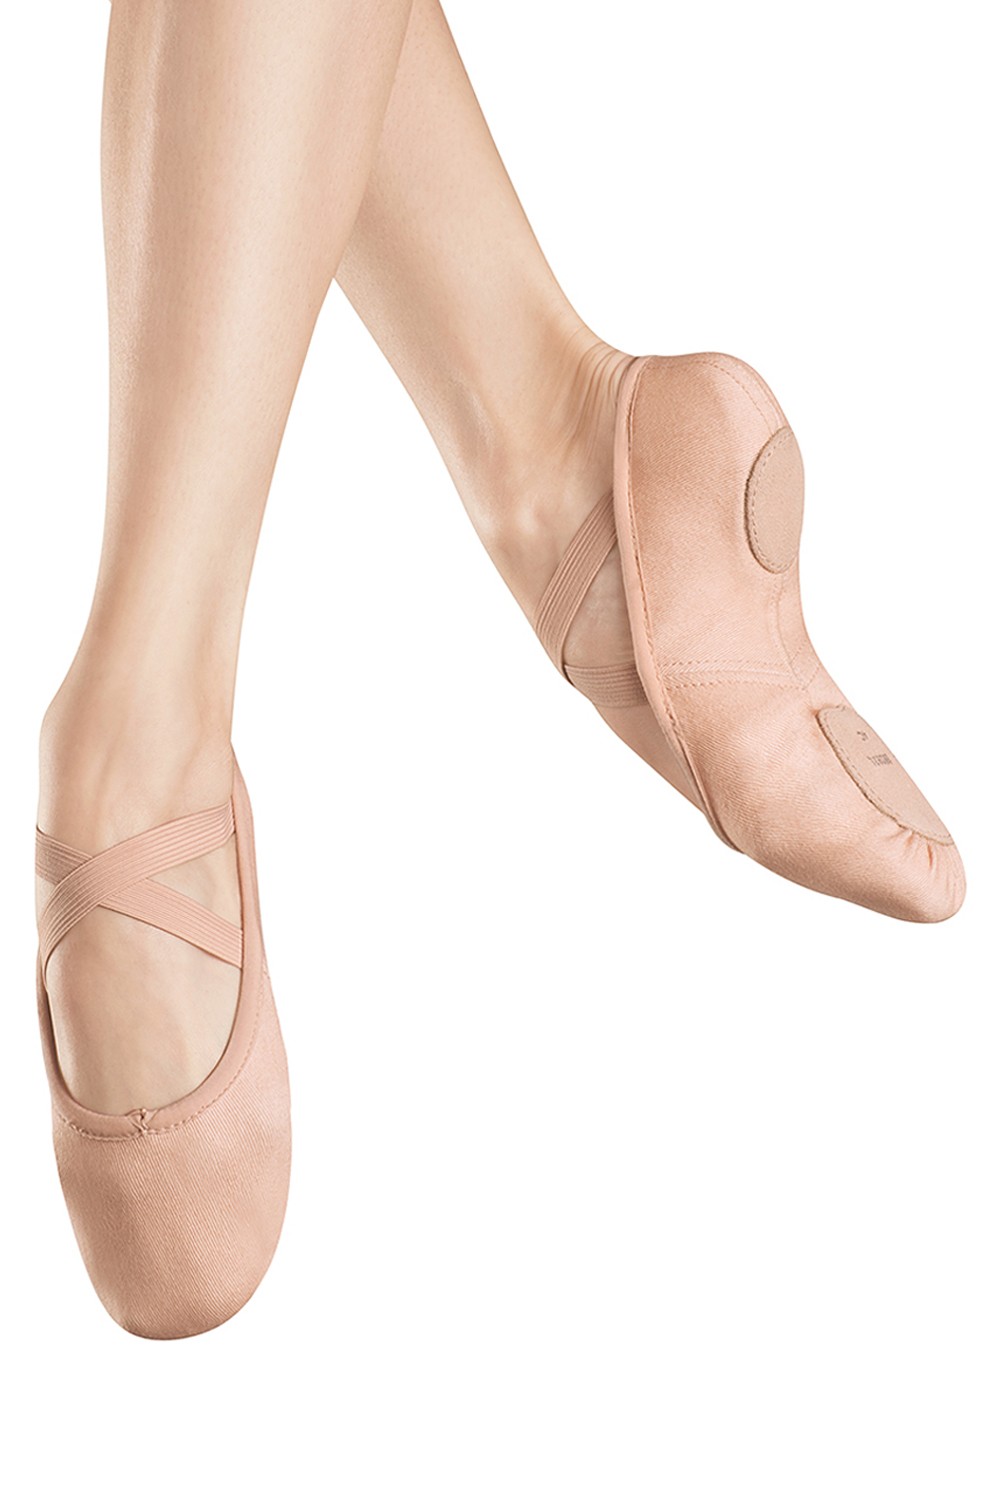 ballet slippers zenith womenu0027s ballet shoes ISIEDIR